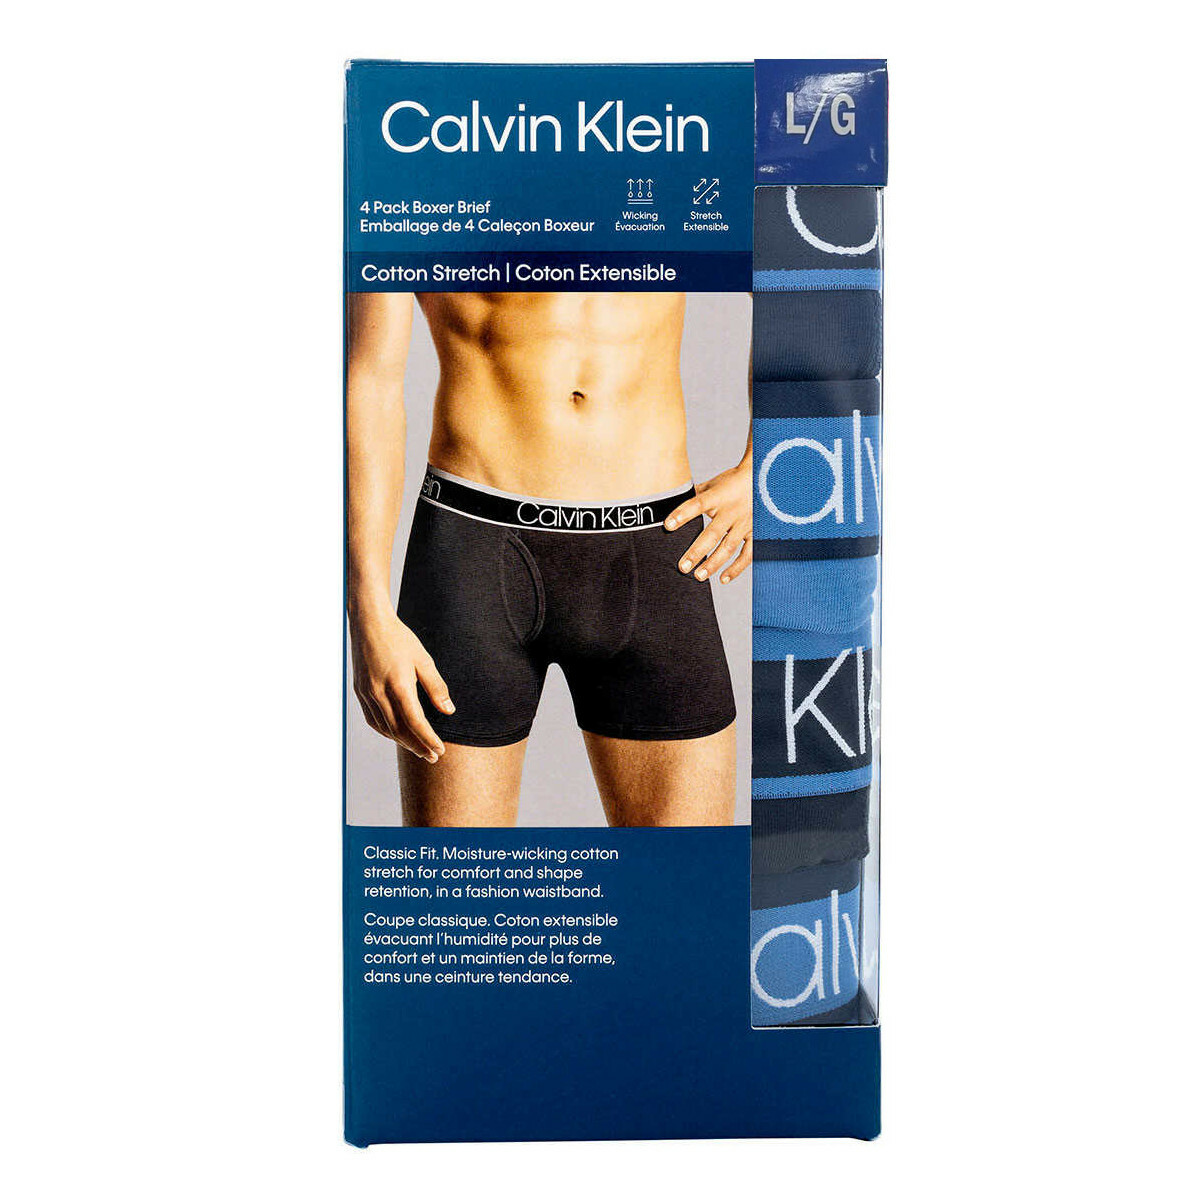 Calvin Klein Classic Fit 4 Pack Boxer Brief